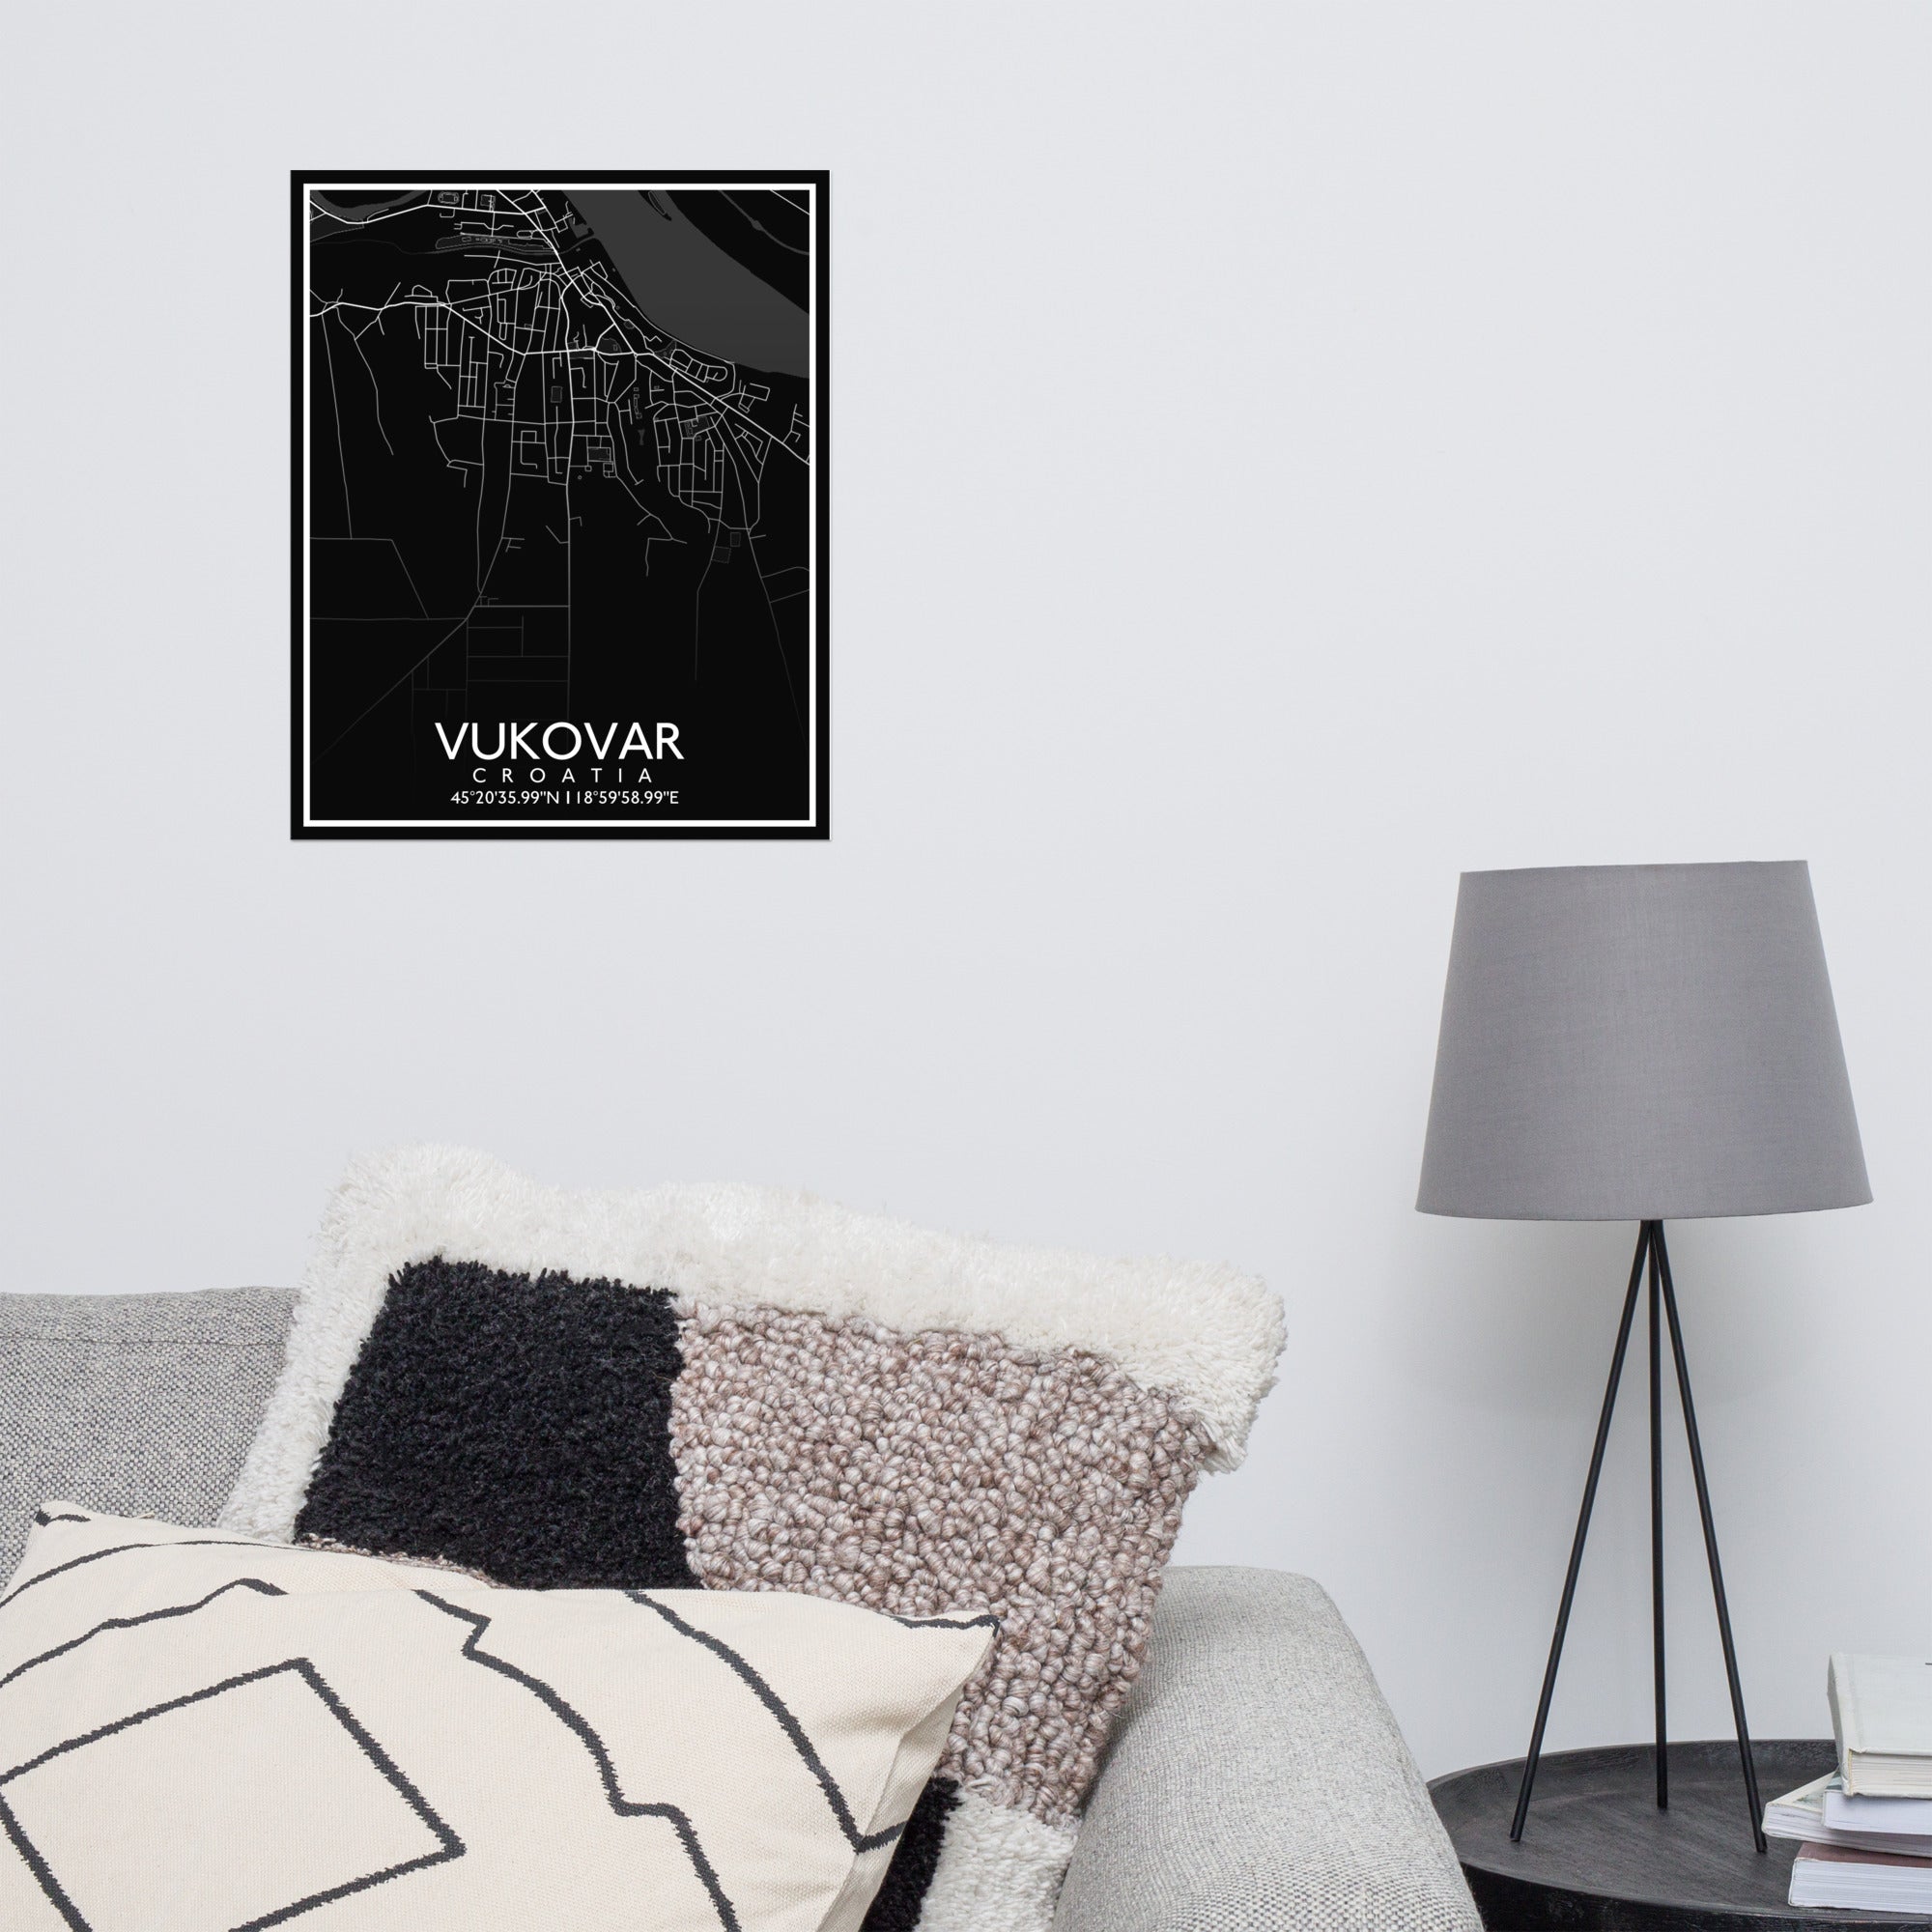 Vukovar - Black City Map Matte Poster